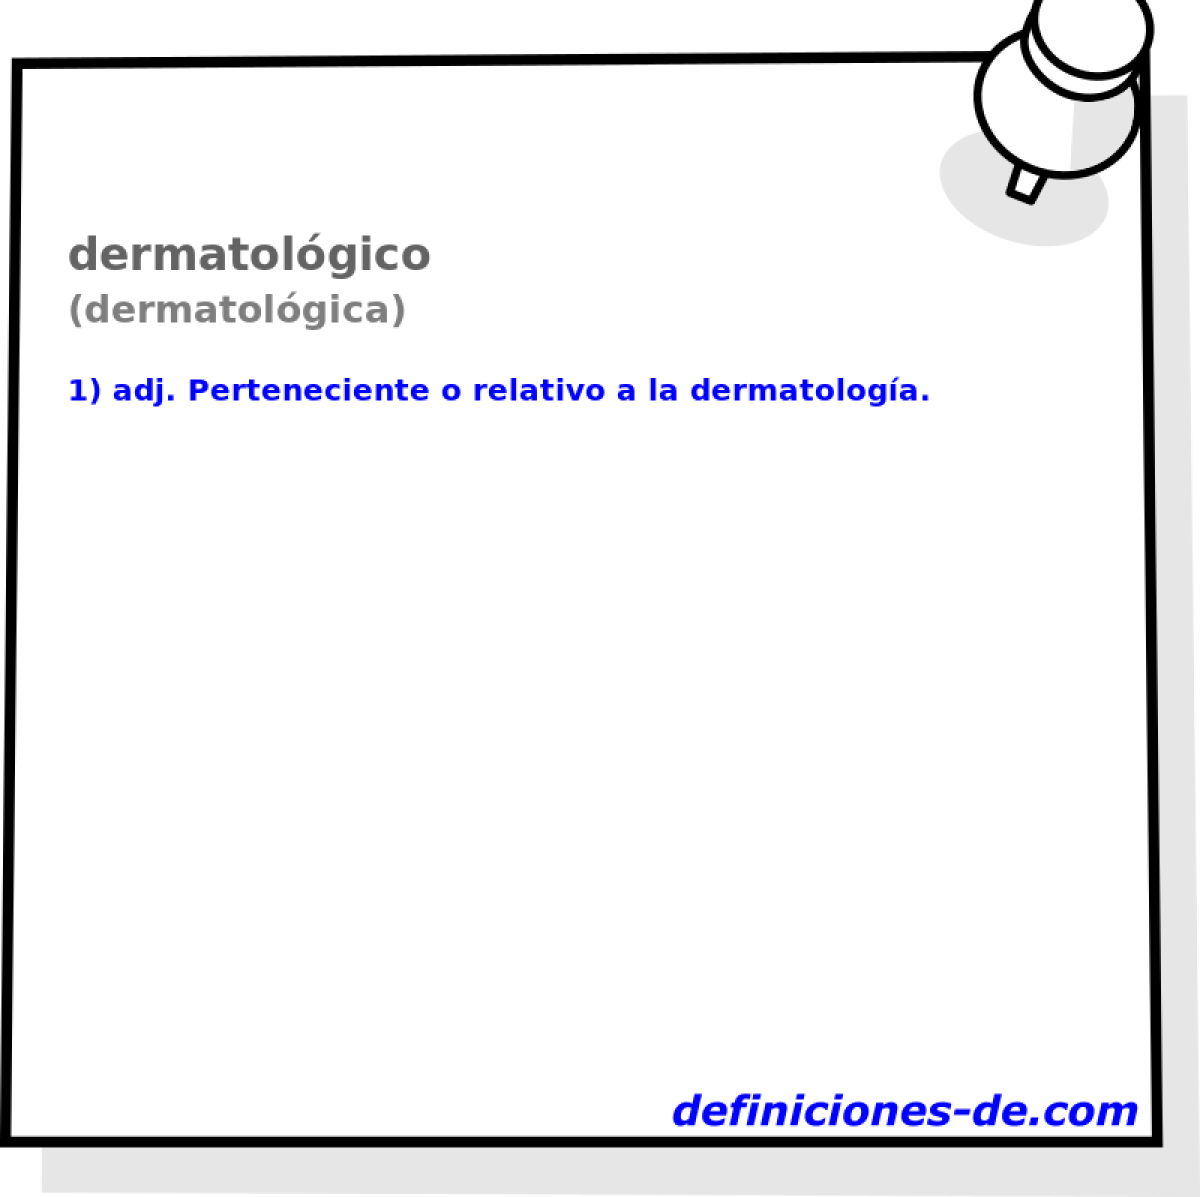 dermatolgico (dermatolgica)